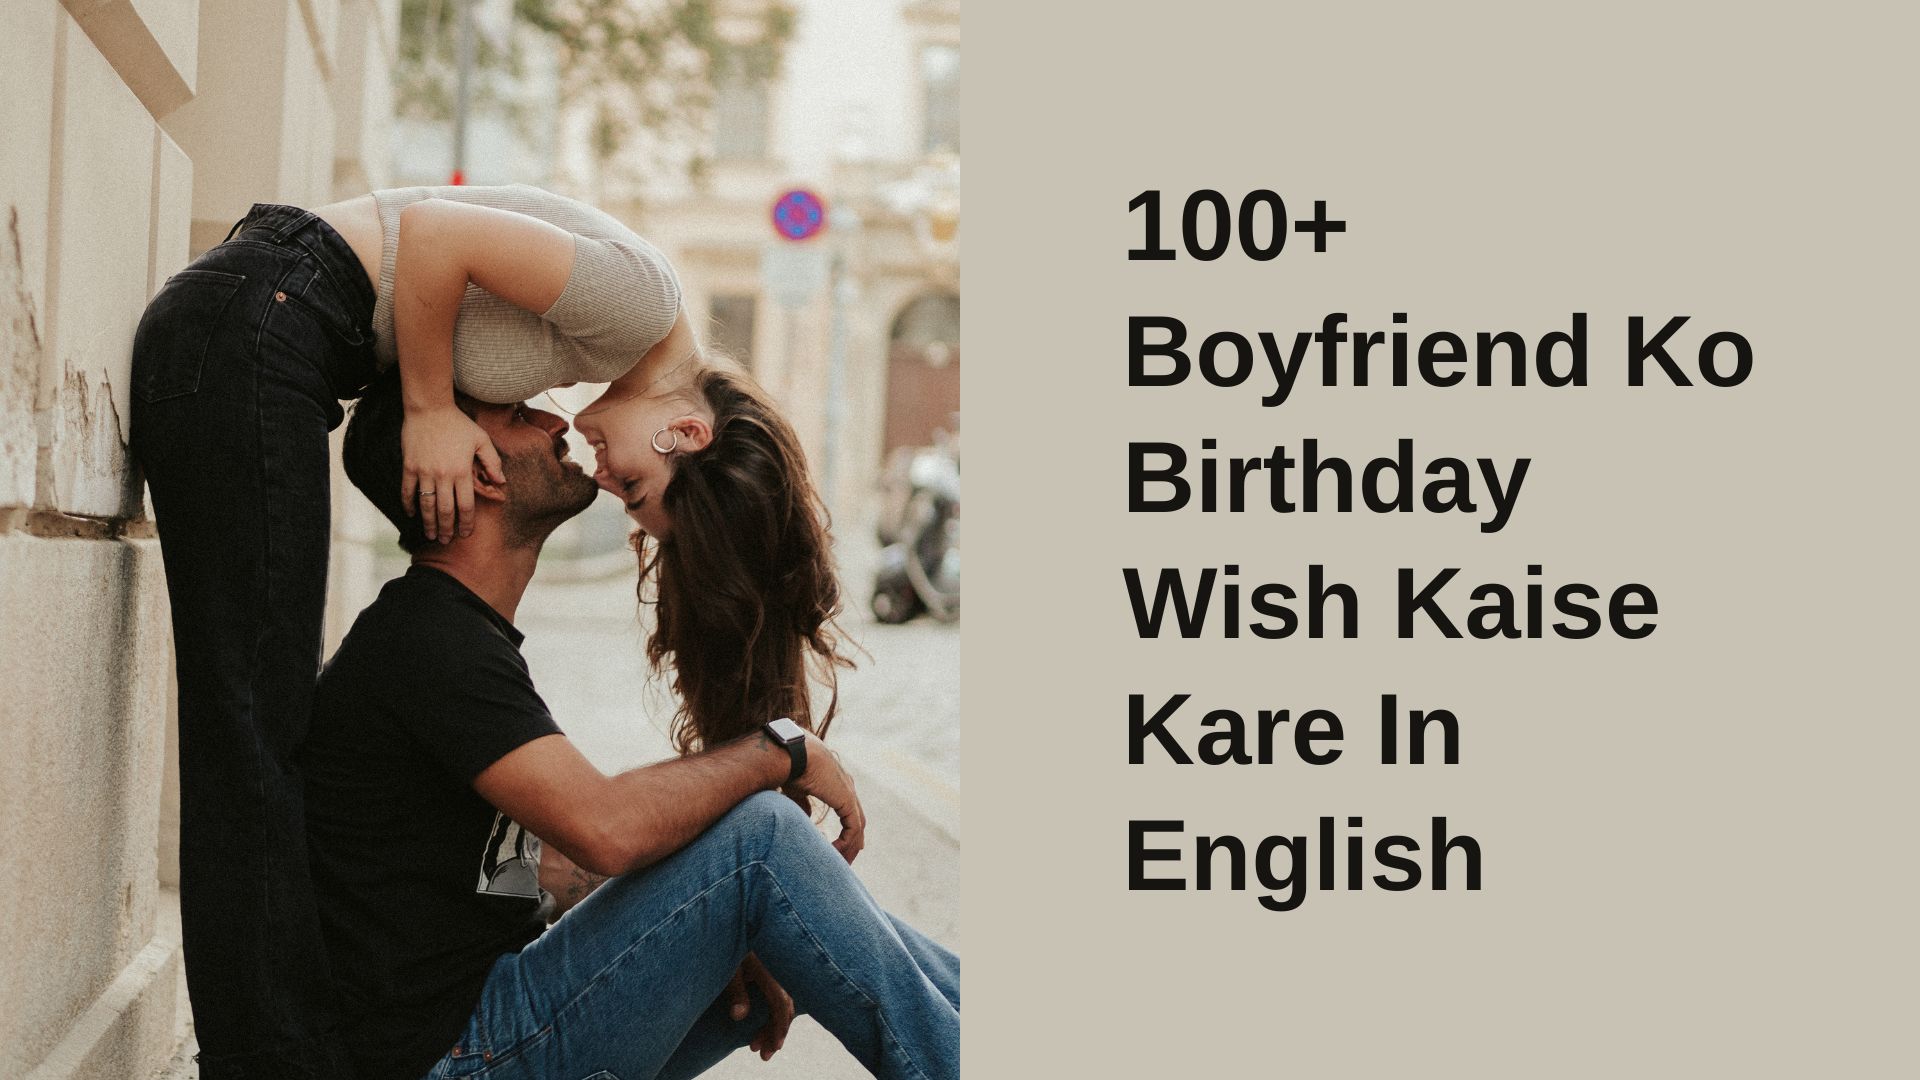 100+ Boyfriend Ko Birthday Wish Kaise Kare In English | Apne love ko birthday wish kaise